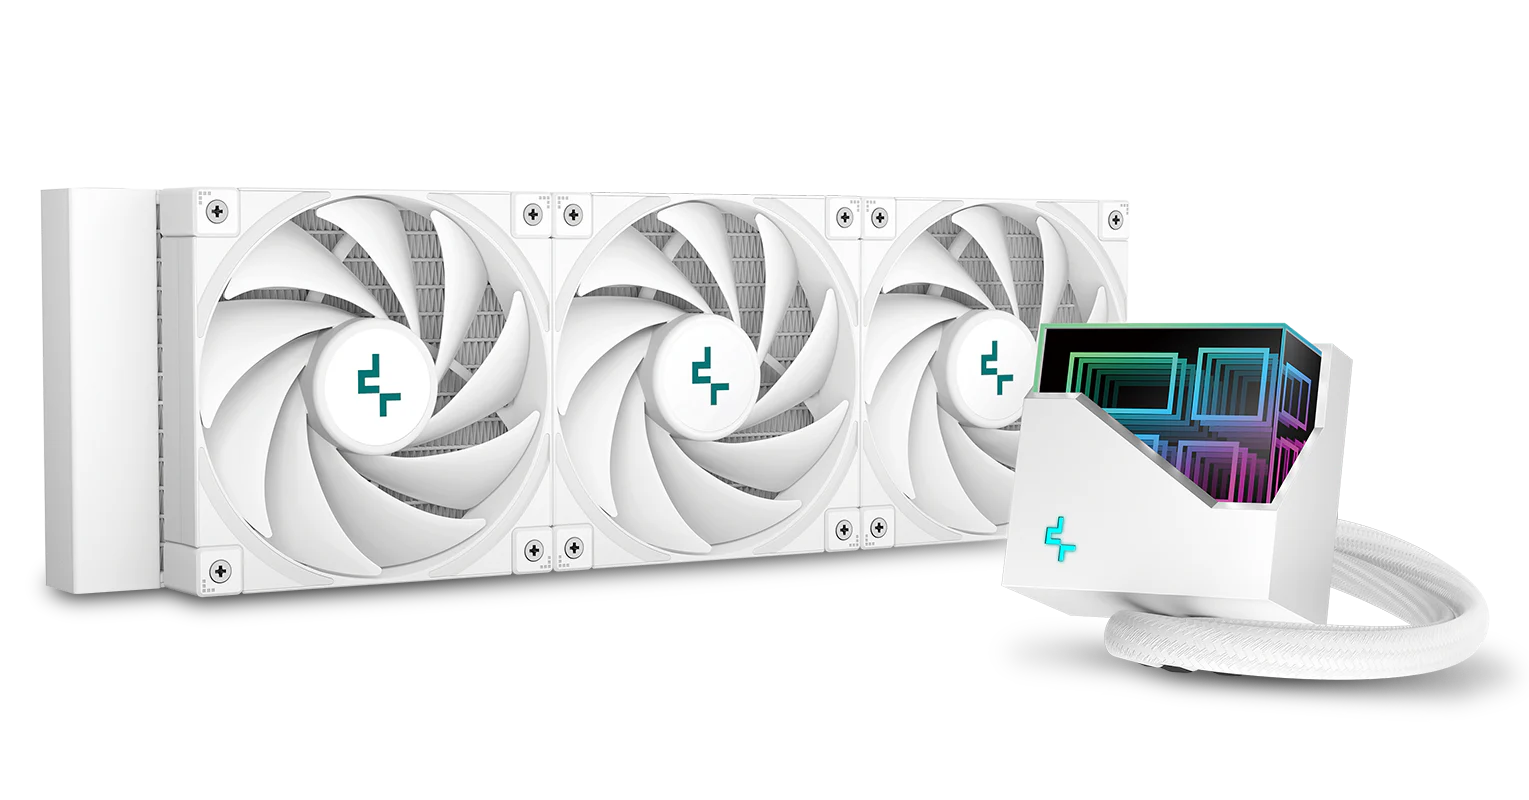 DeepCool LT720 Premium 360mm Water Cooling Kit; High-Performance FK120 FDB  Fans; Multidimensional Infinity Mirror Block; 5V - Micro Center